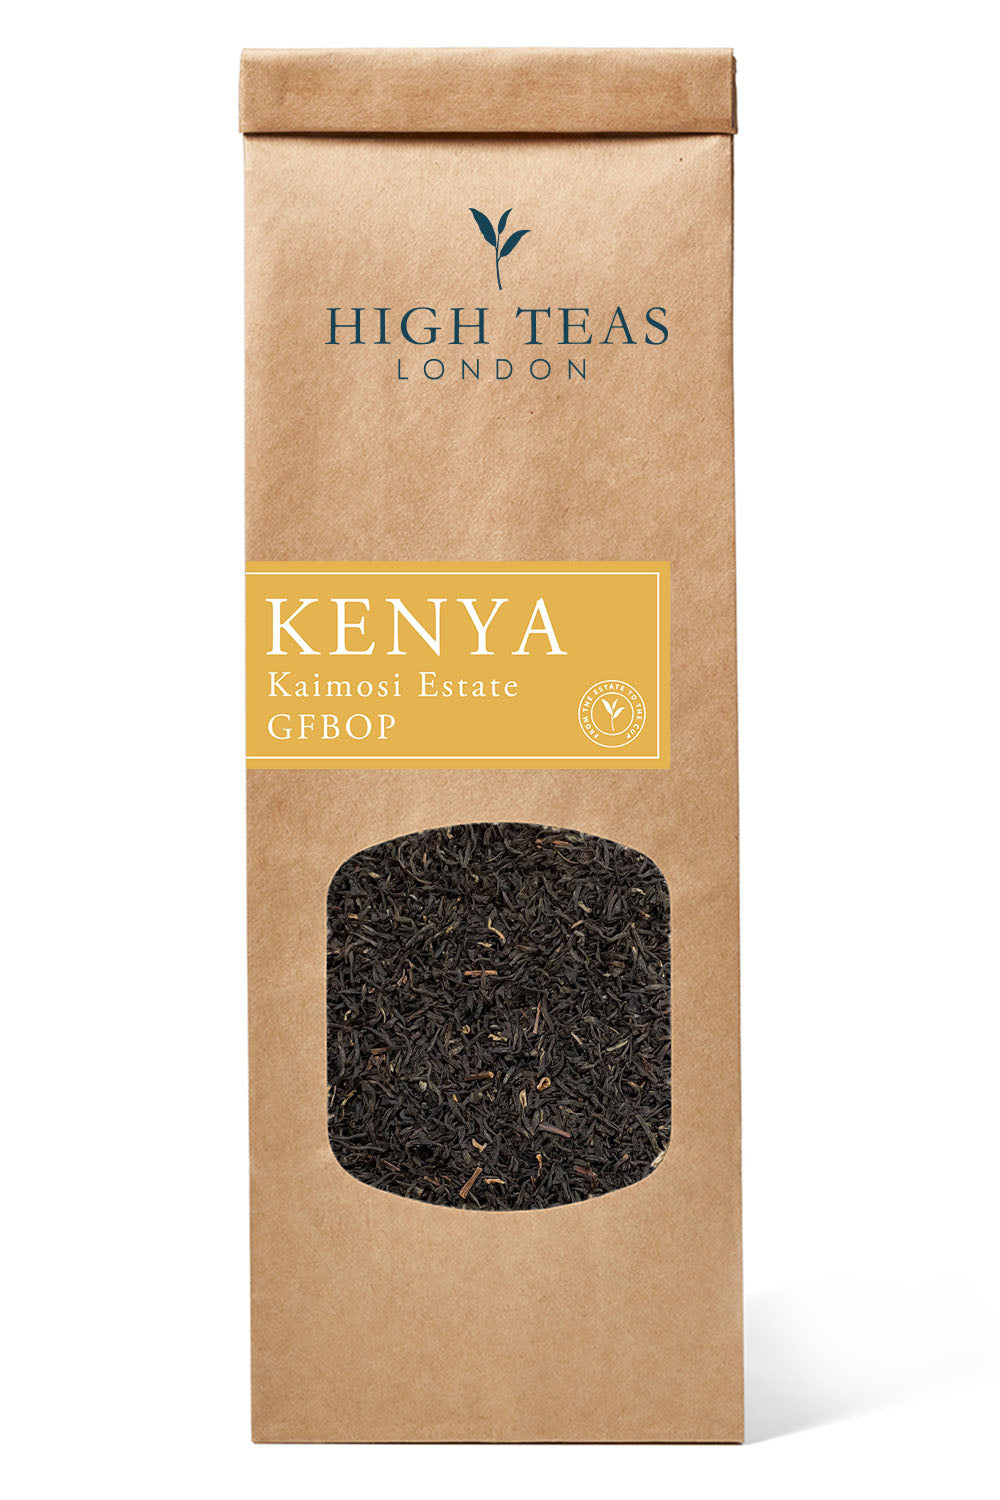 Kenya - Kaimosi Estate GFBOP-50g-Loose Leaf Tea-High Teas